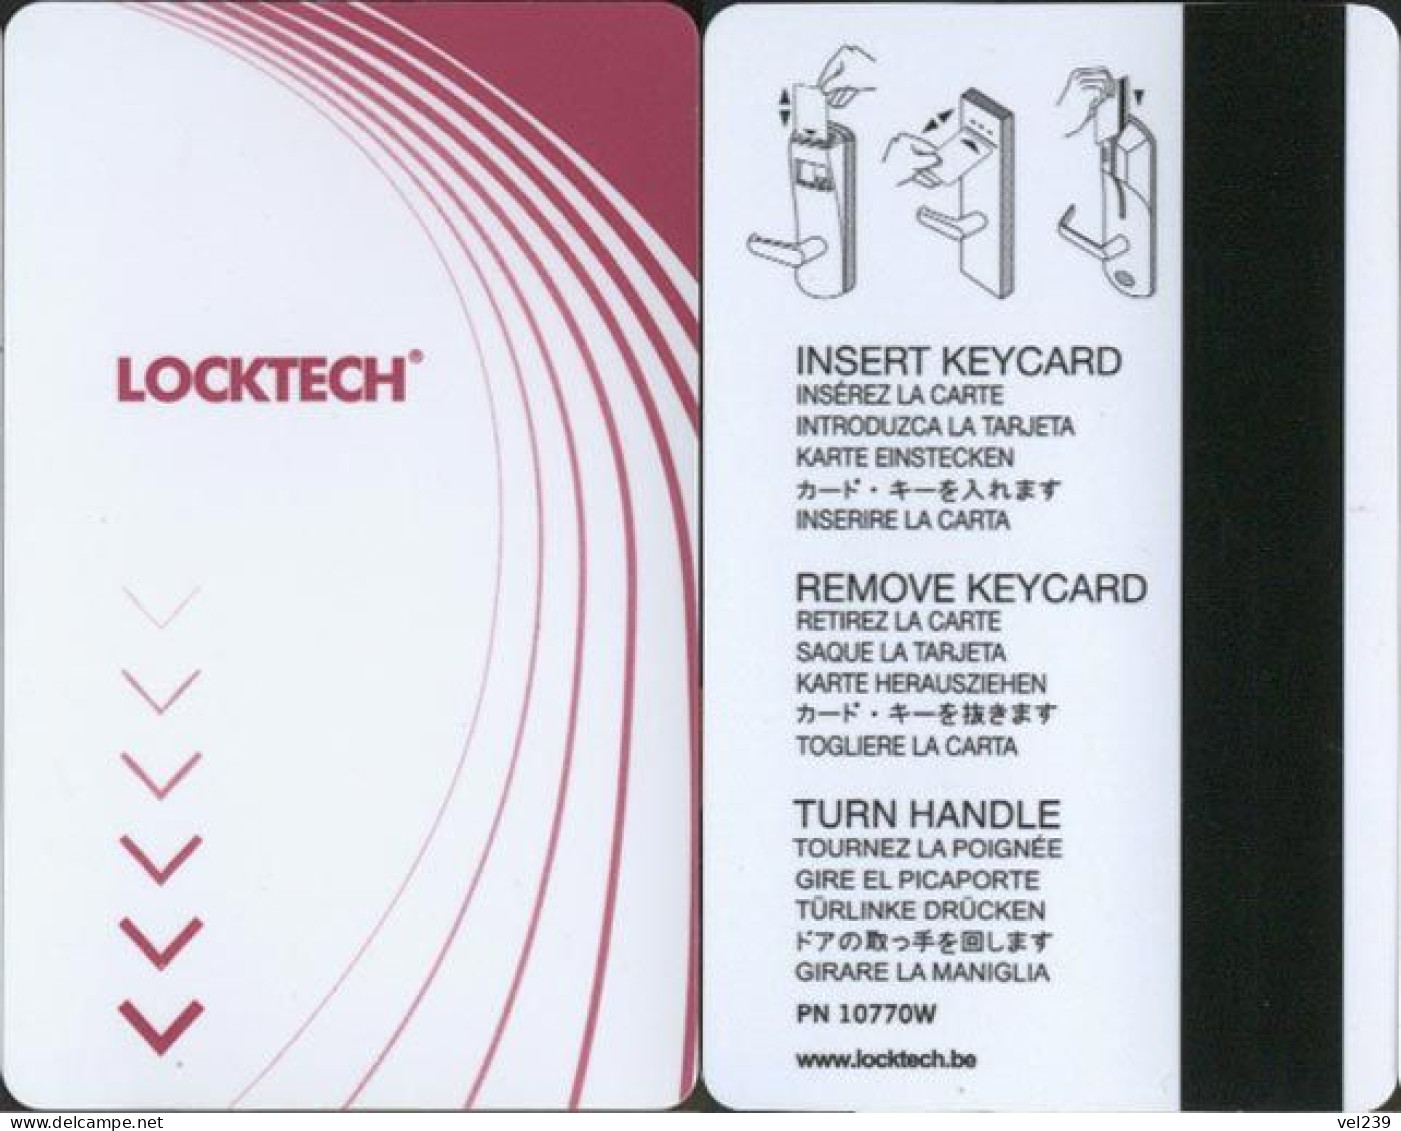 Locktek - Hotel Keycards